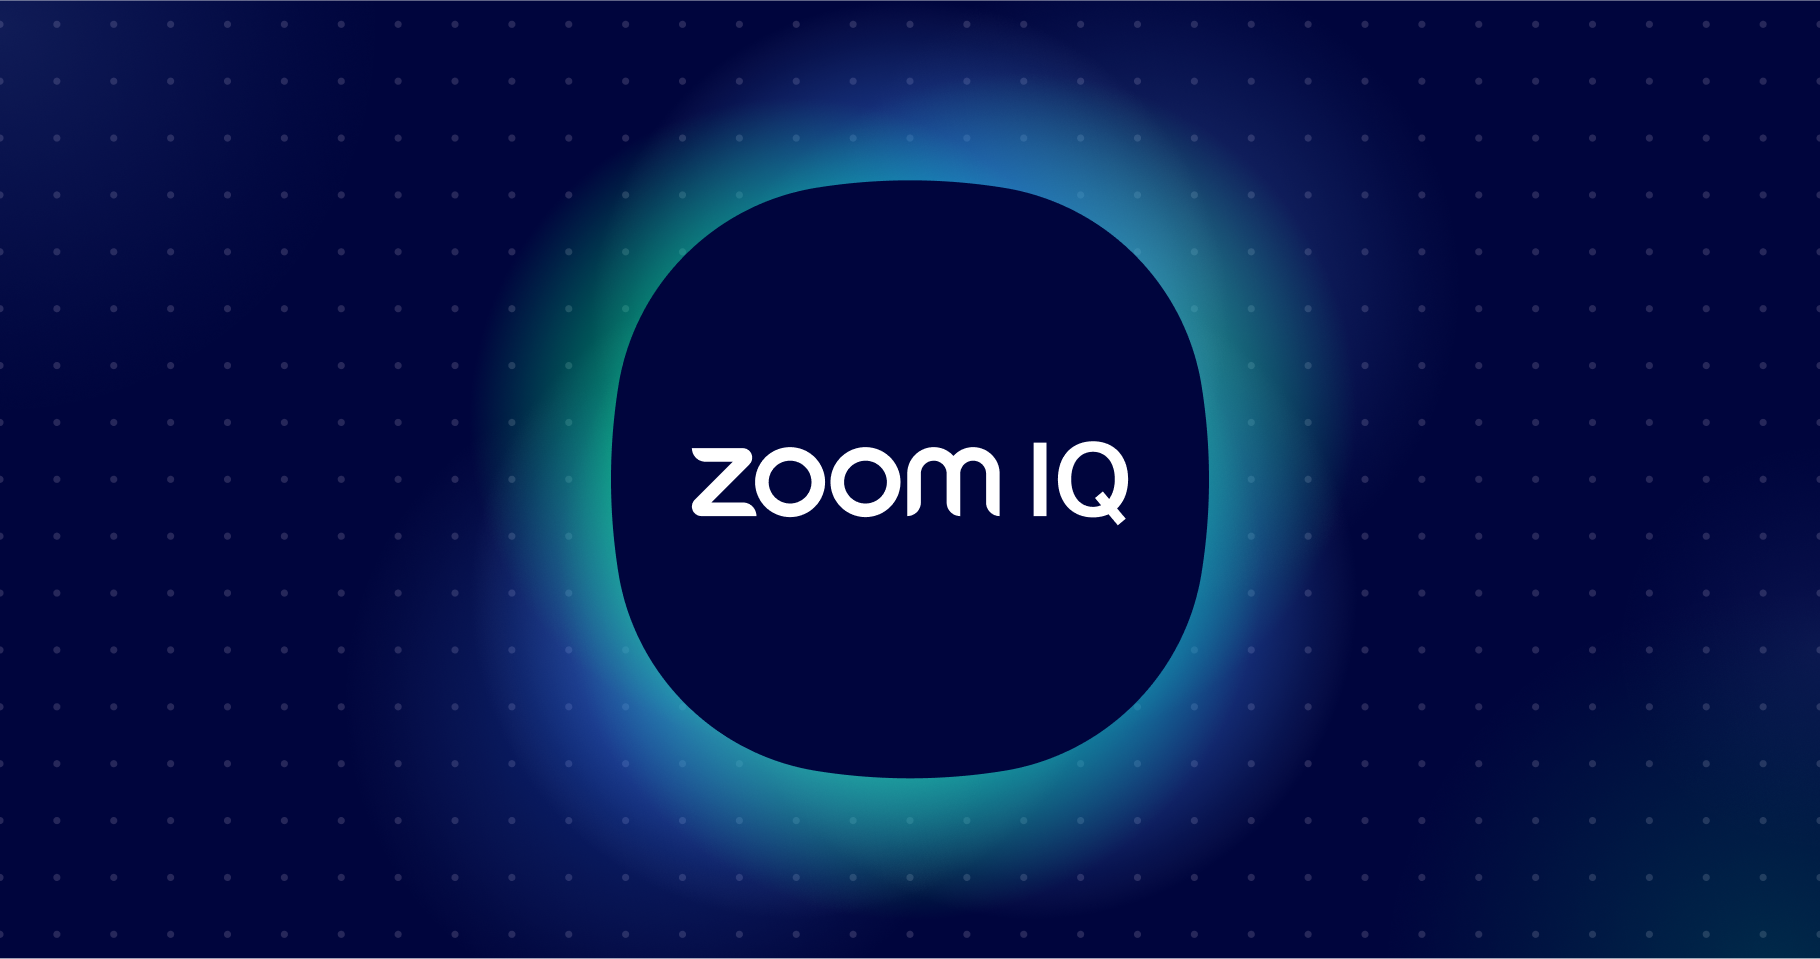 Zoom and OpenAI Partnership Brings New Capabilities to Zoom IQ